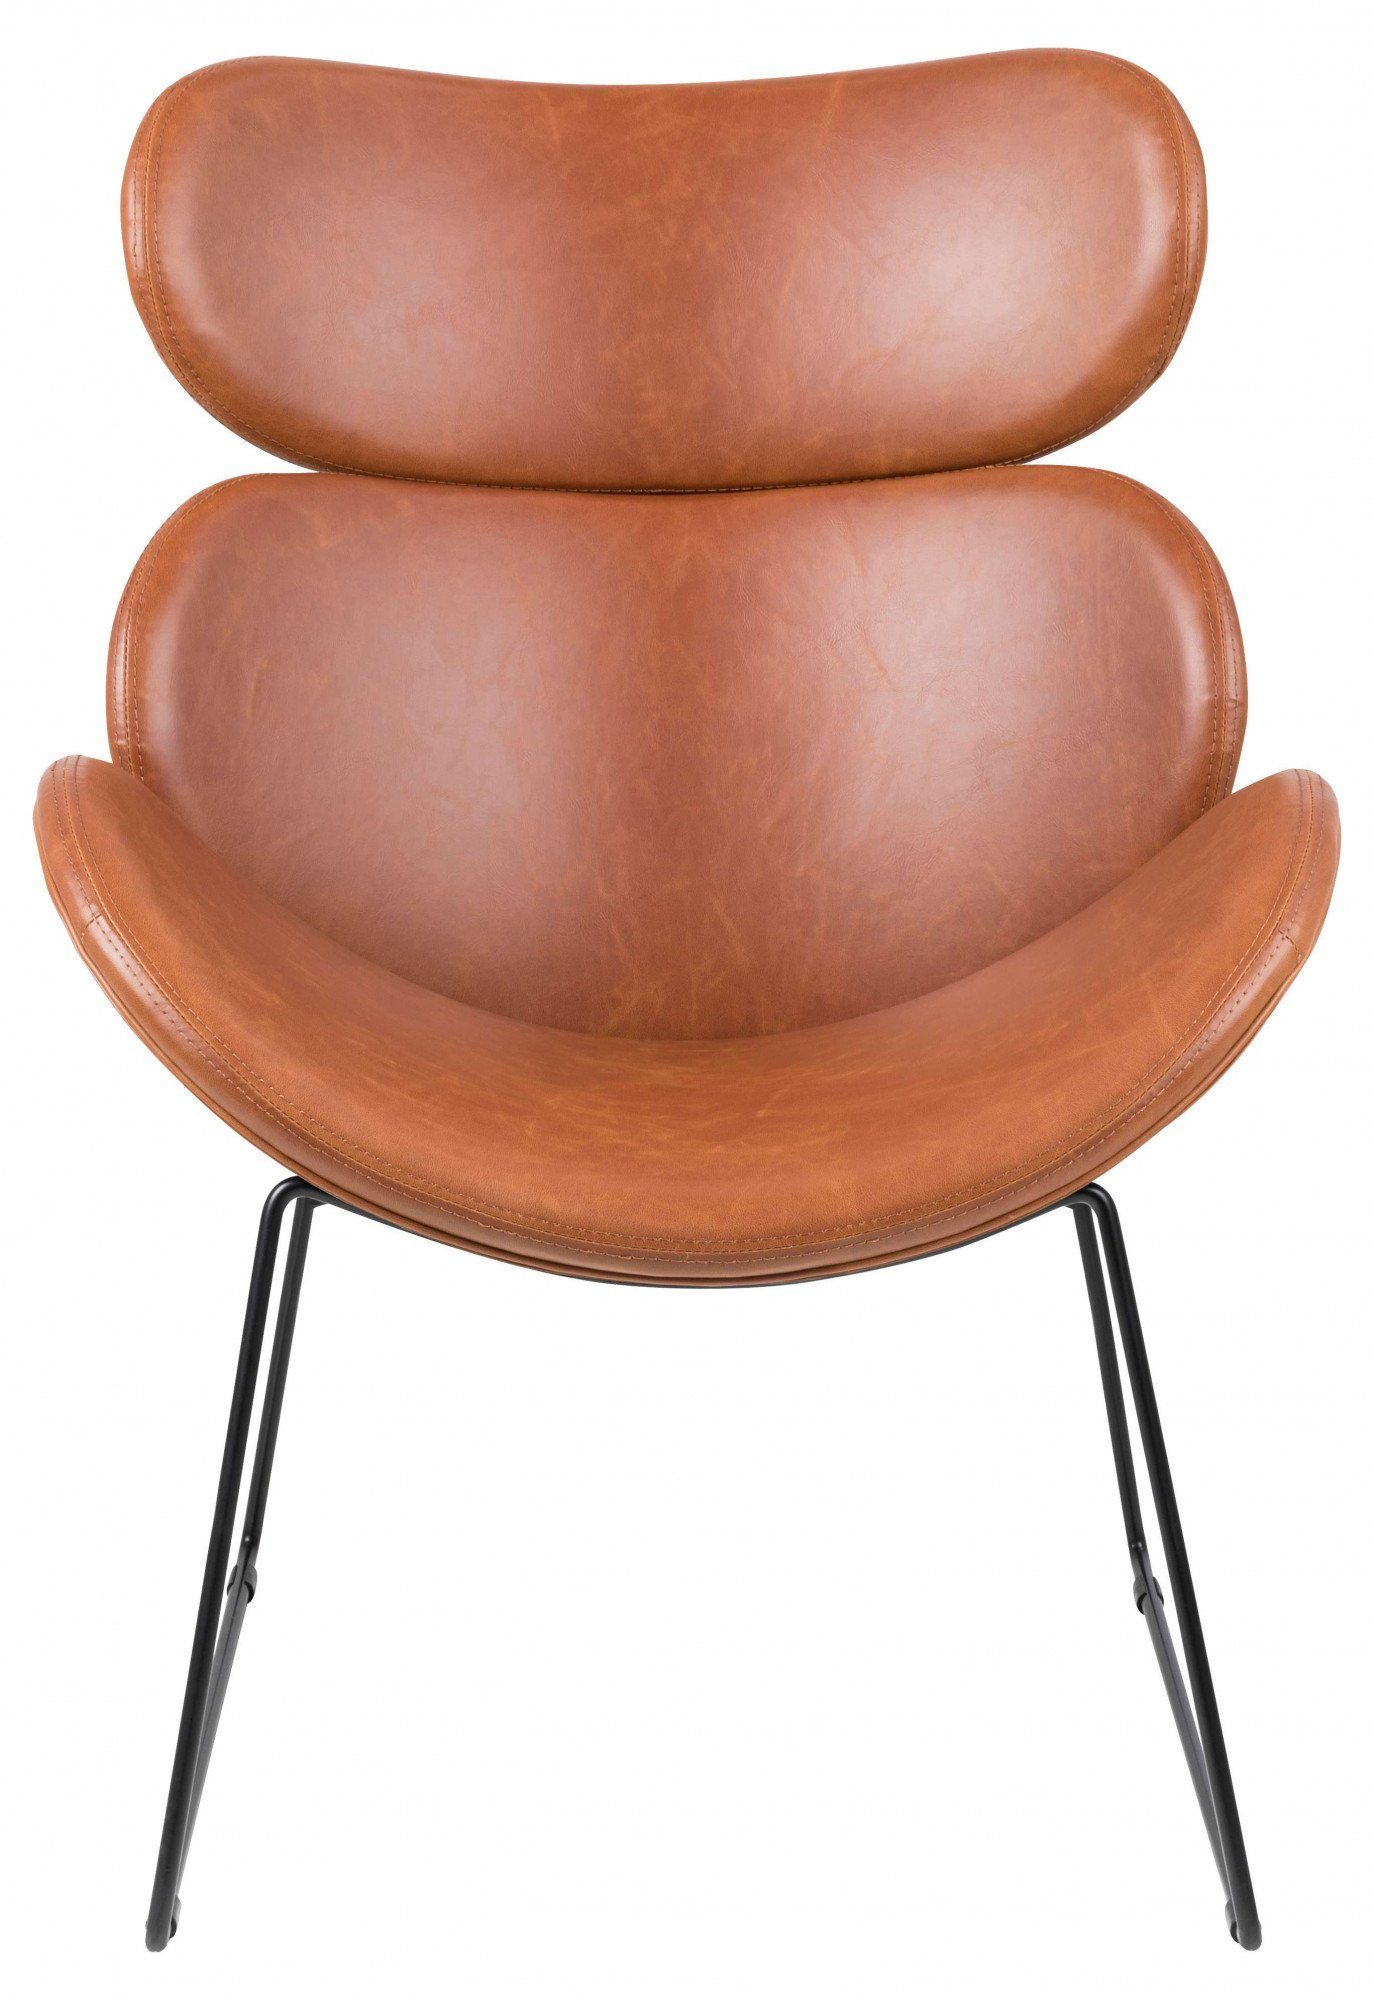 ACTONA GROUP Stuhl Cazar Loungesessel, Brandyfarbenem PU Schwarz aus Kufengestell Stahl und lederoptik